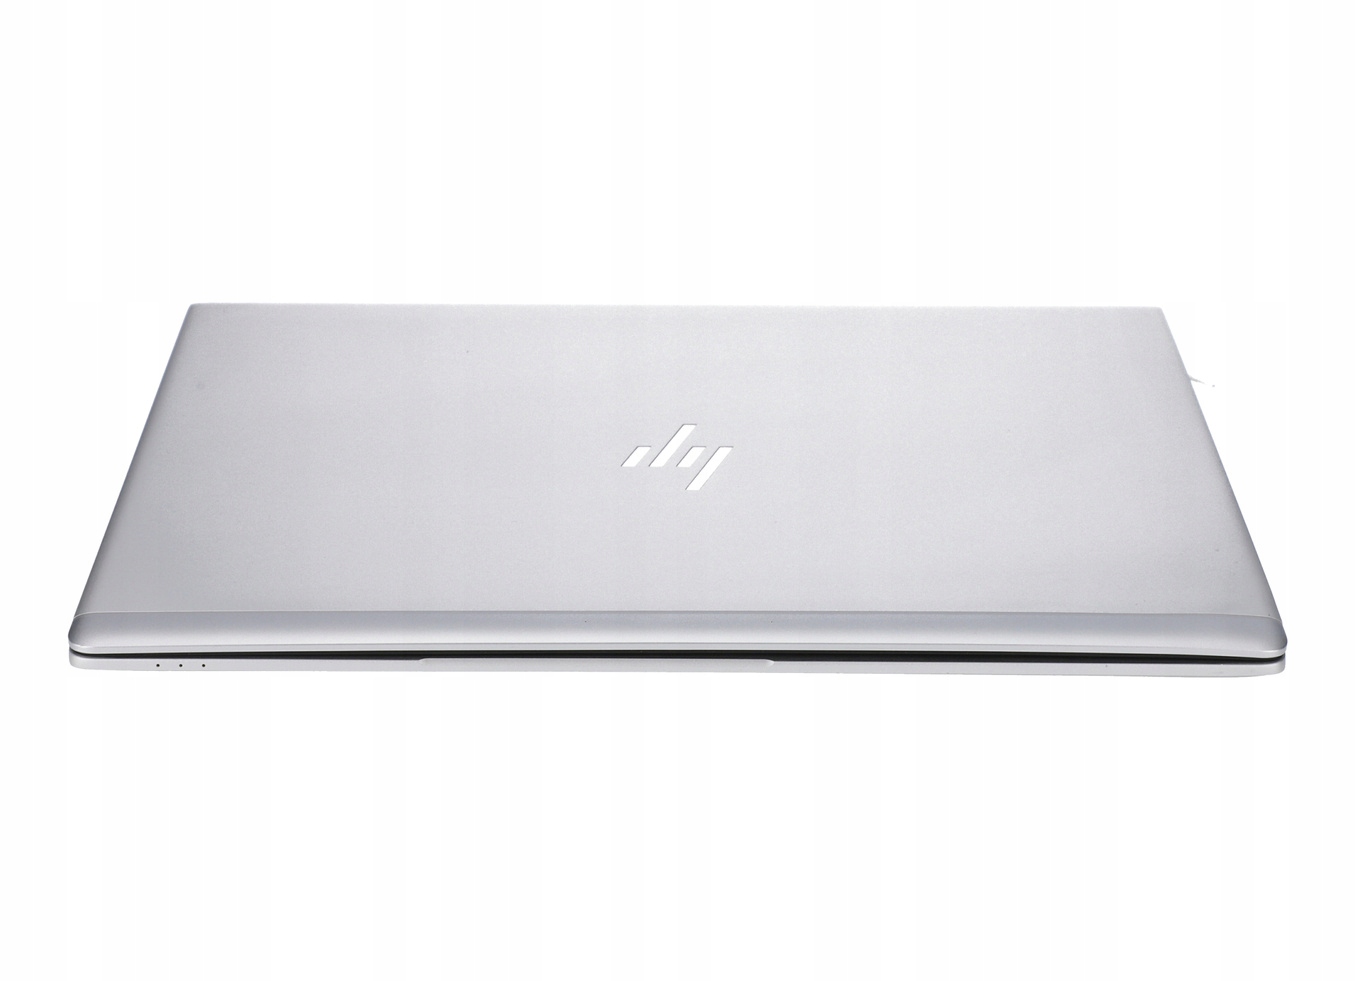 Laptop HP 840 G5 i5 16GB 500GB NVMe FullHD klaw PL Liczba rdzeni procesora 4